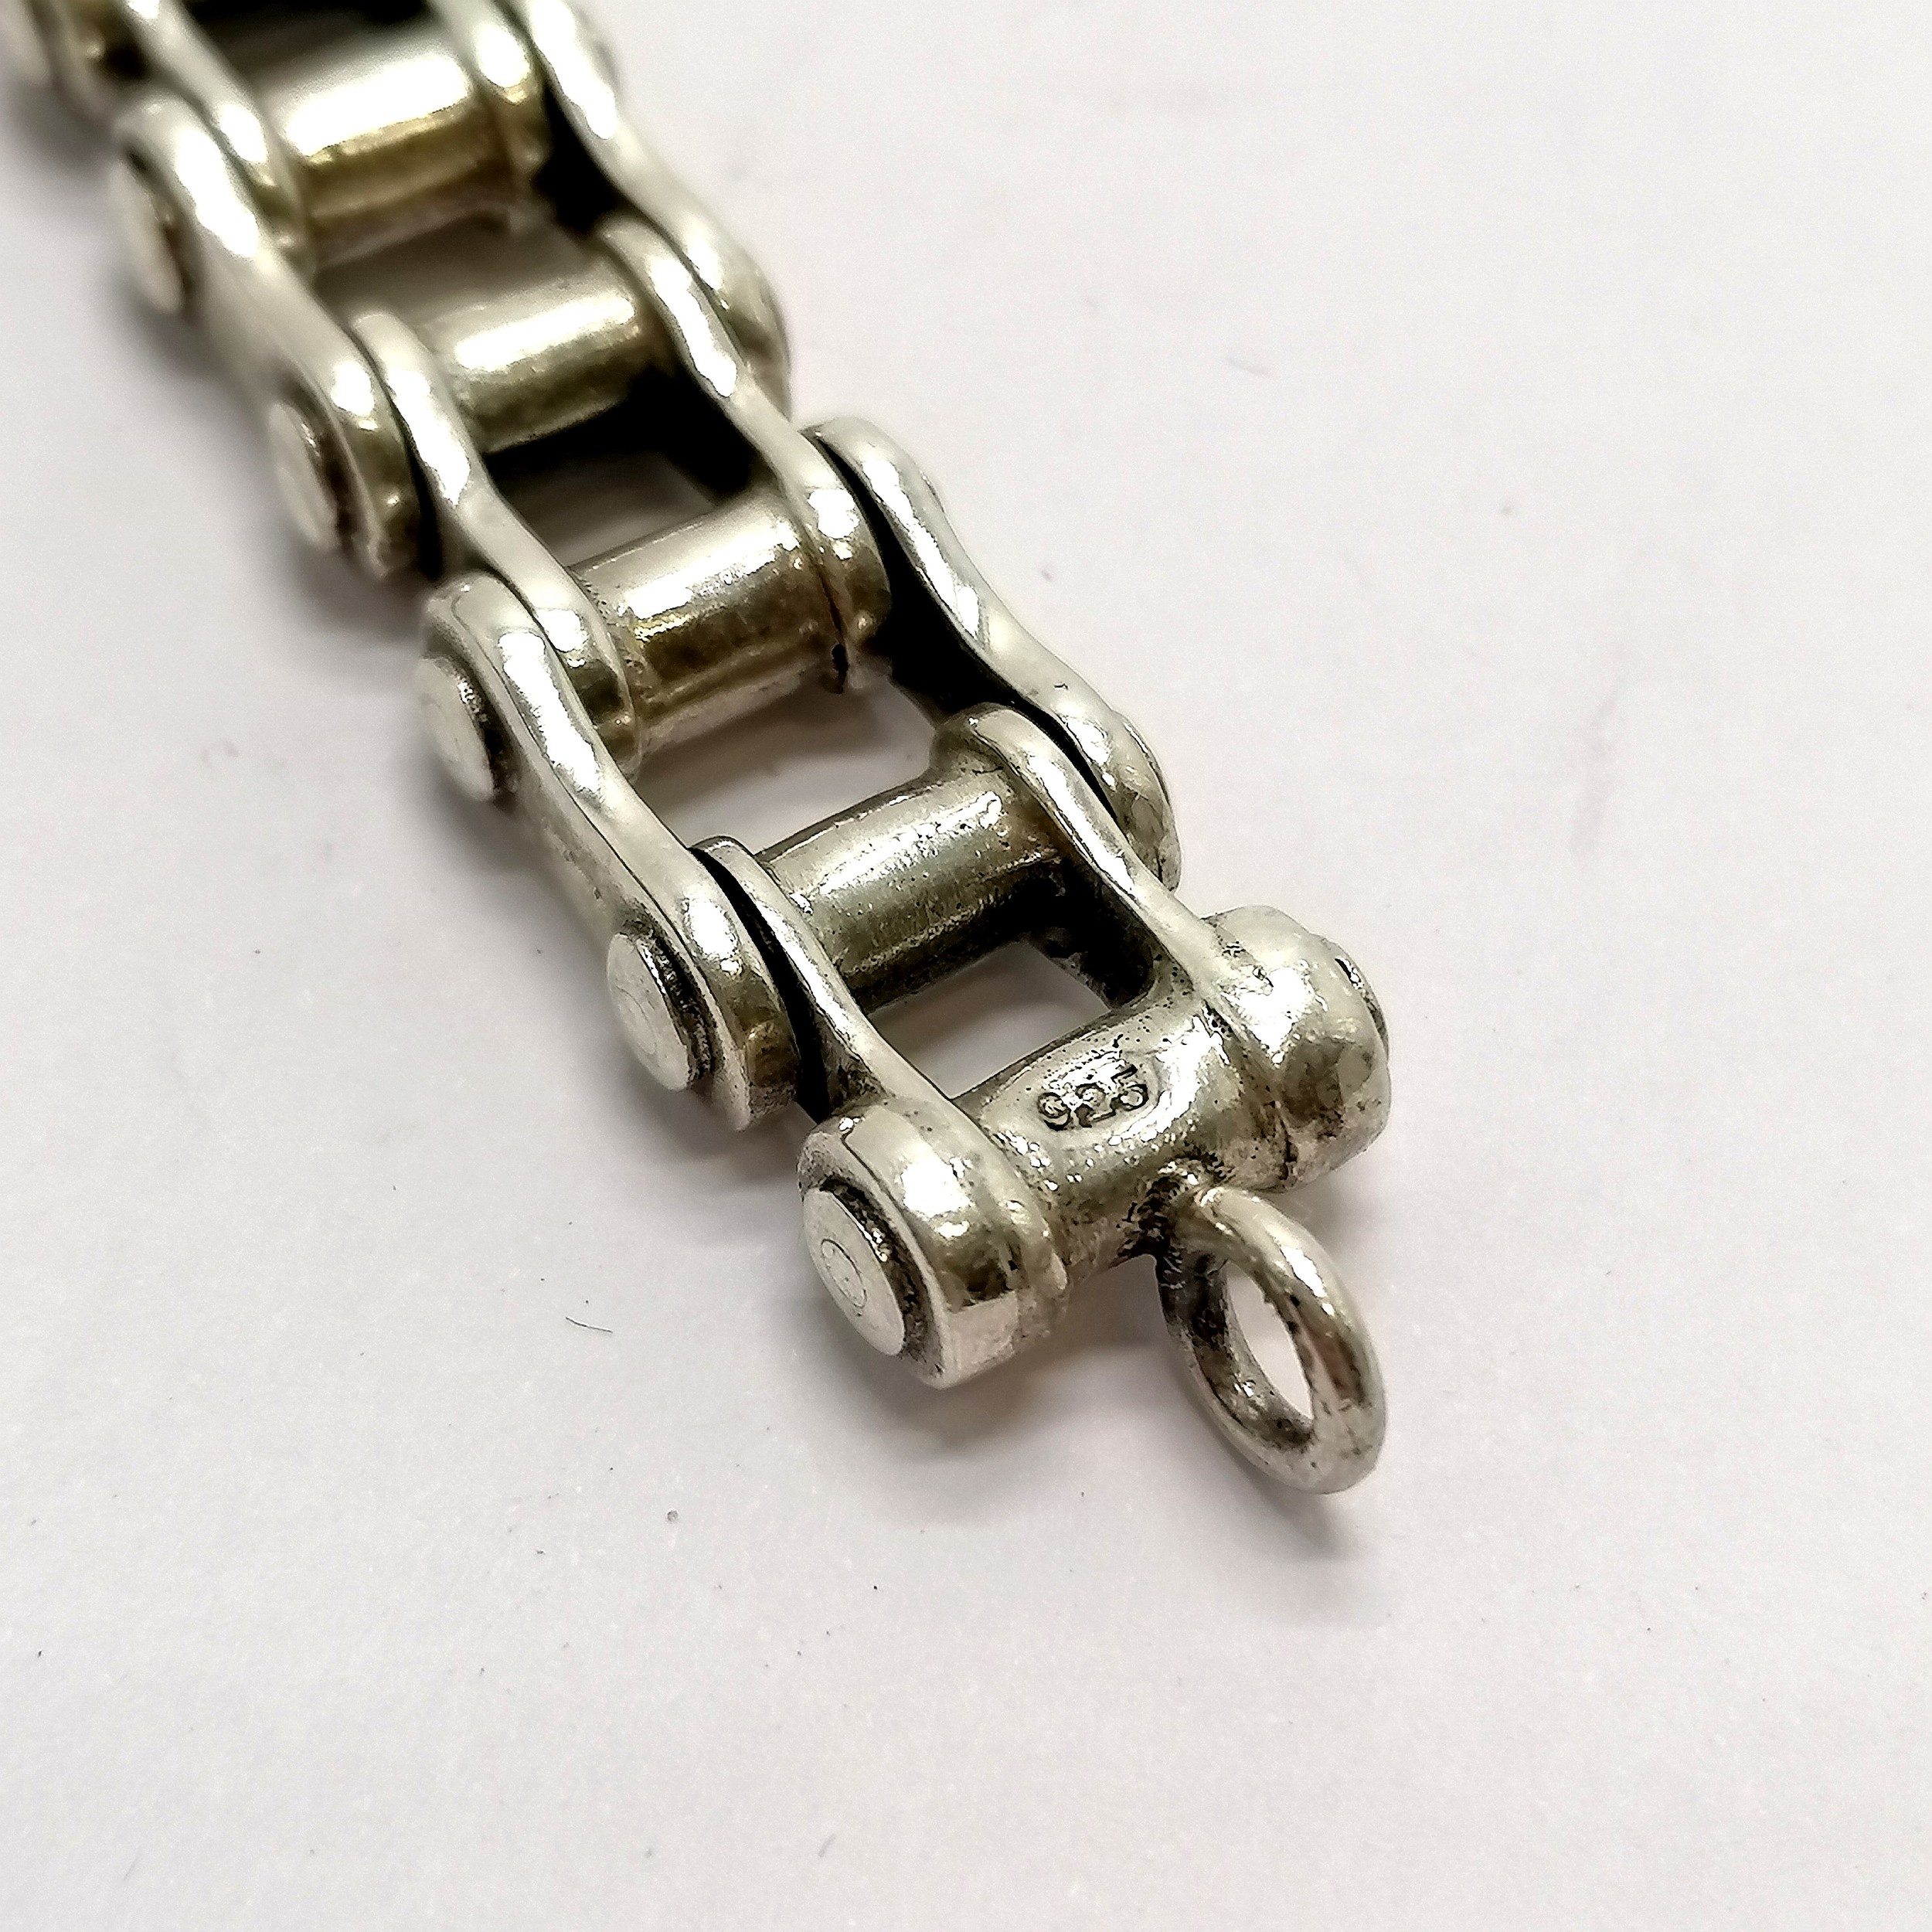 Silver marked bike chain bracelet (lacks clasp) - 21cm long & 62g - Image 2 of 2